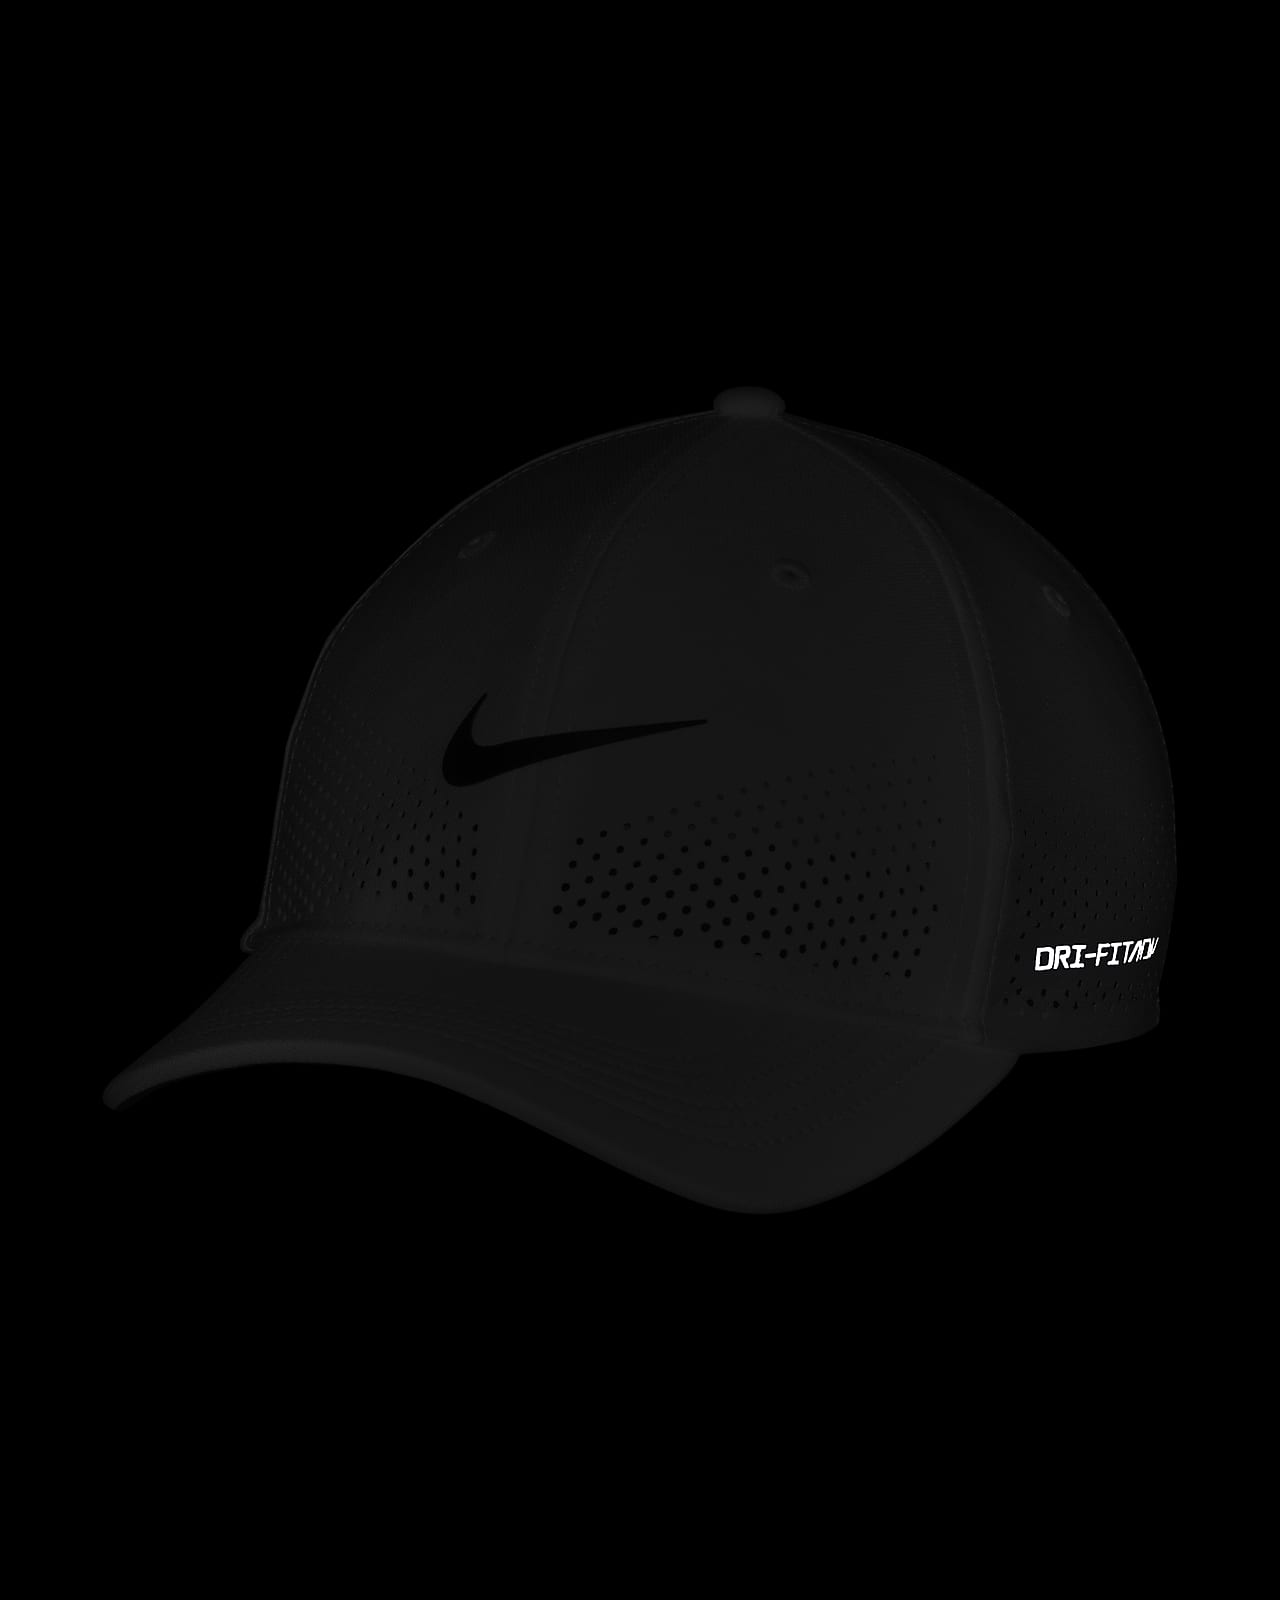 THE TRAINING CAP, Nike AeroBill Legacy91